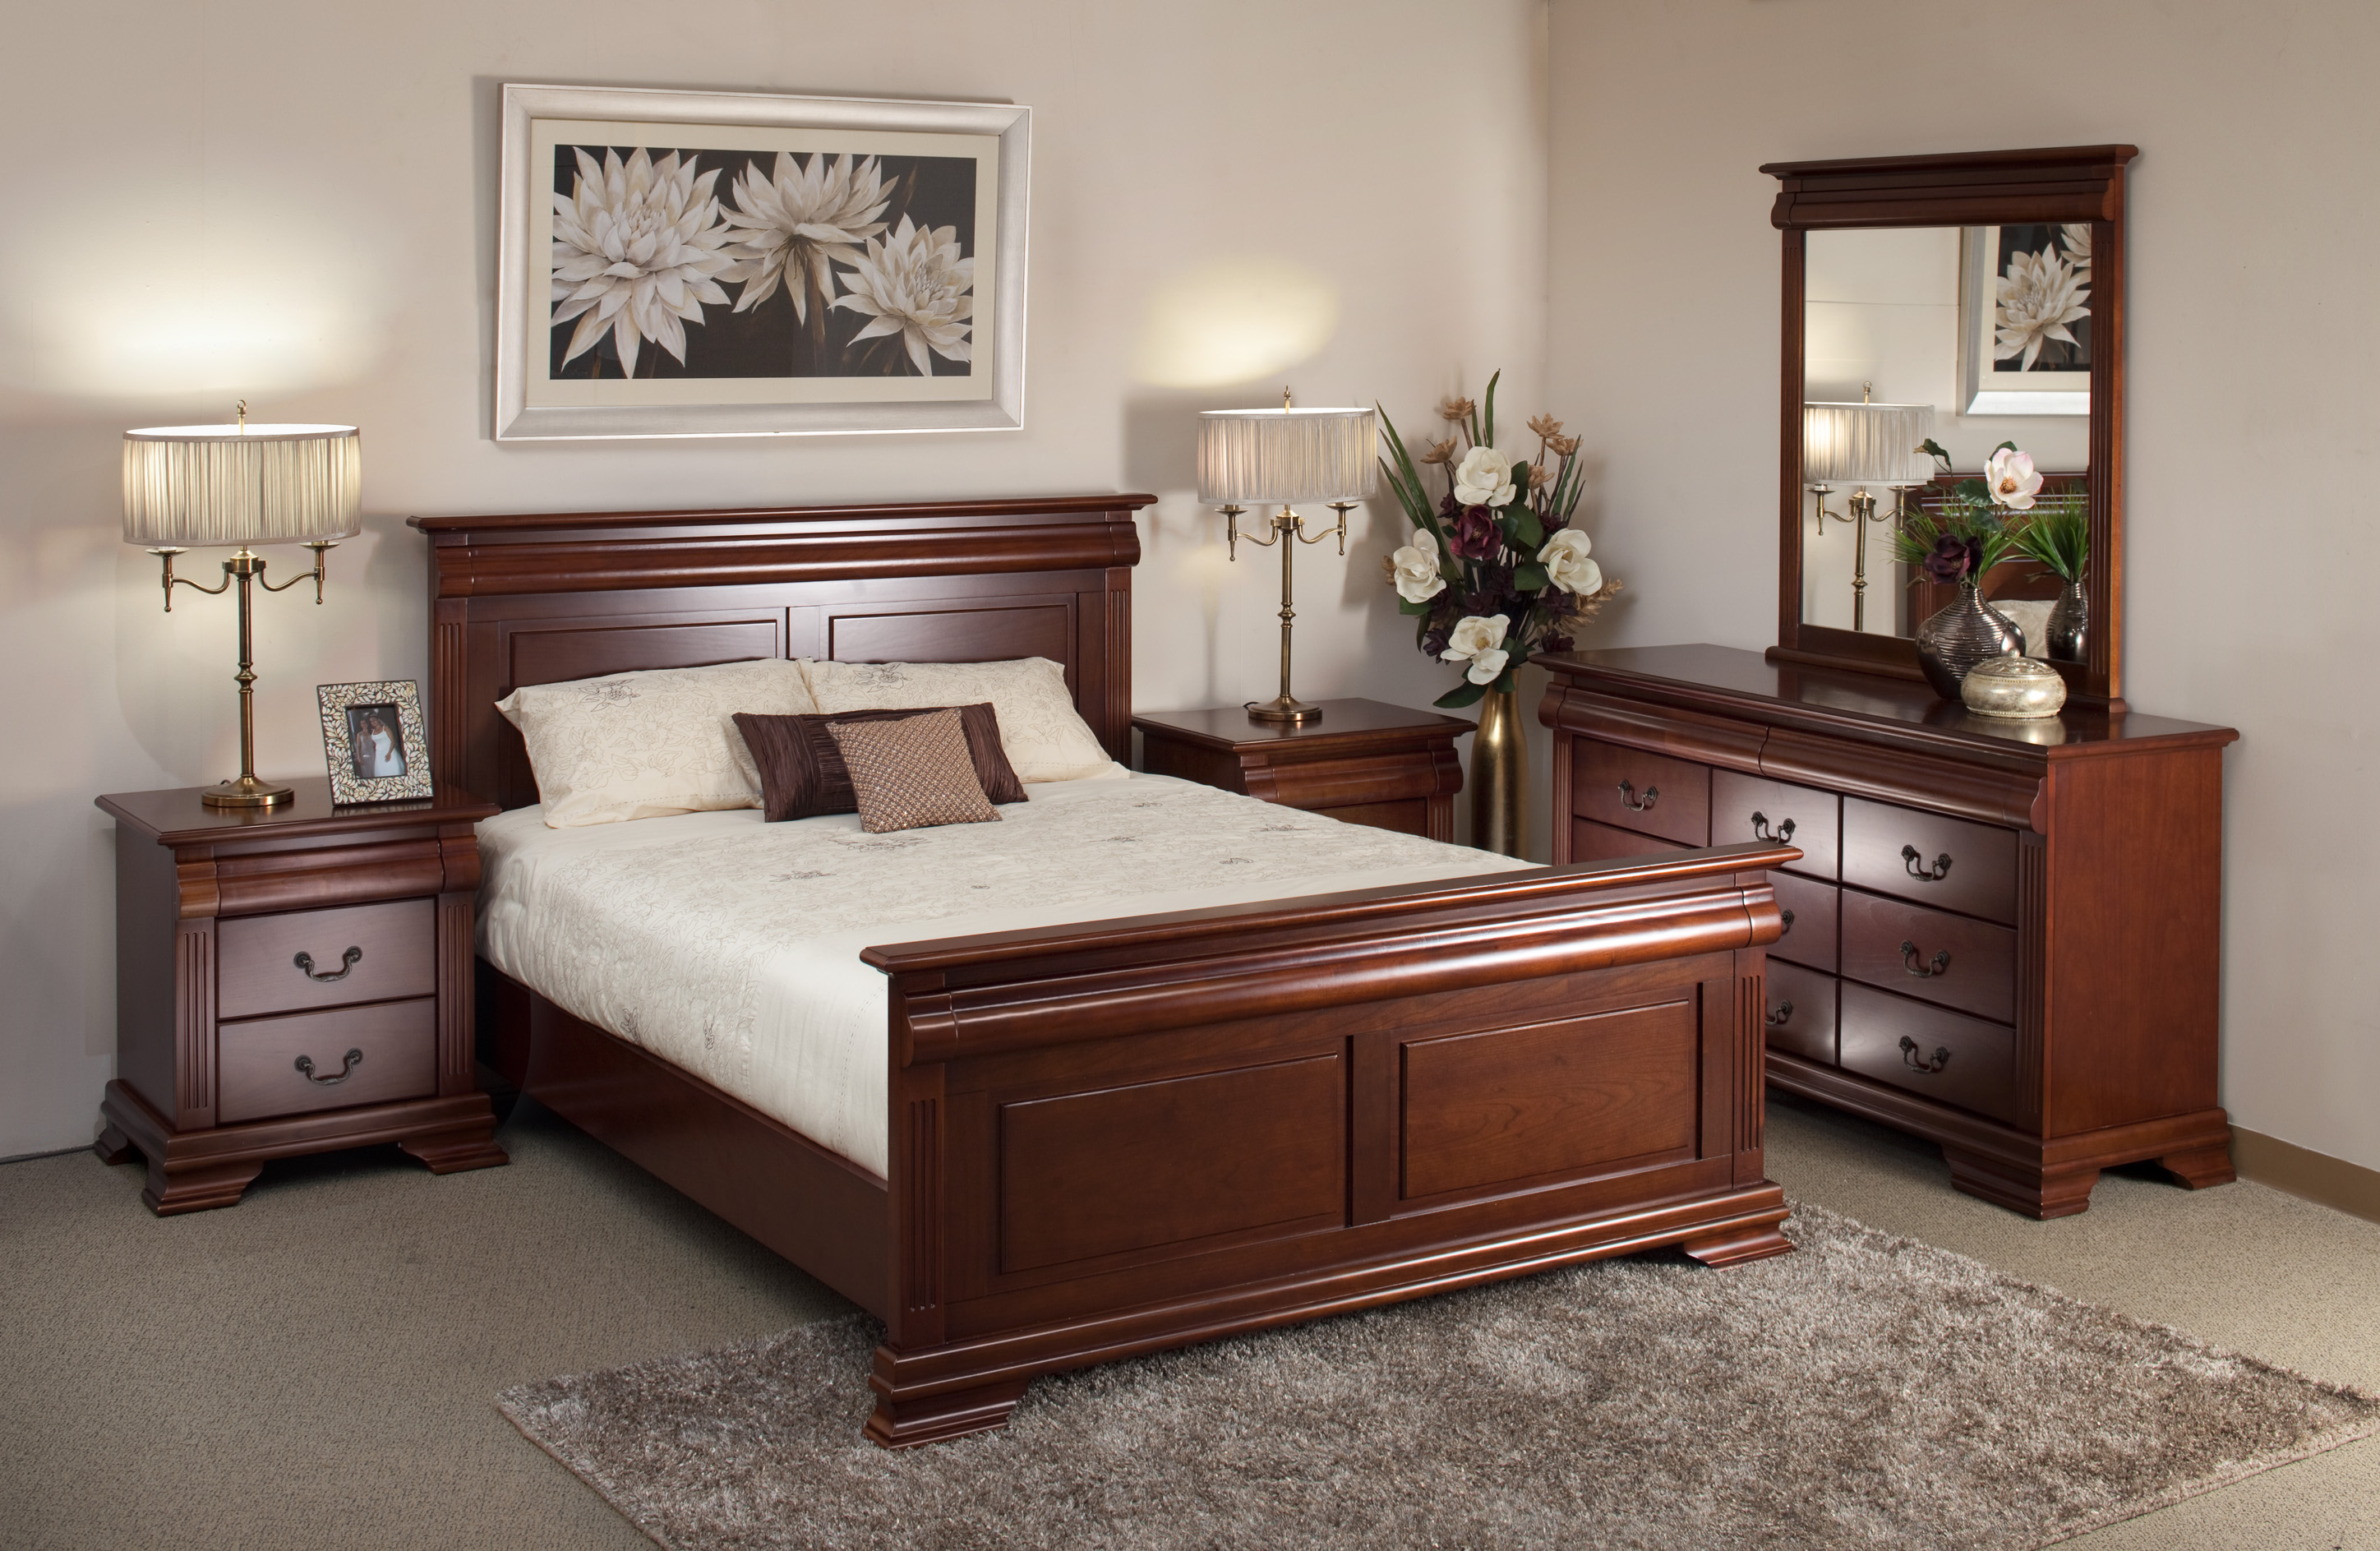 Bedroom furniture ideas XPRTDYB